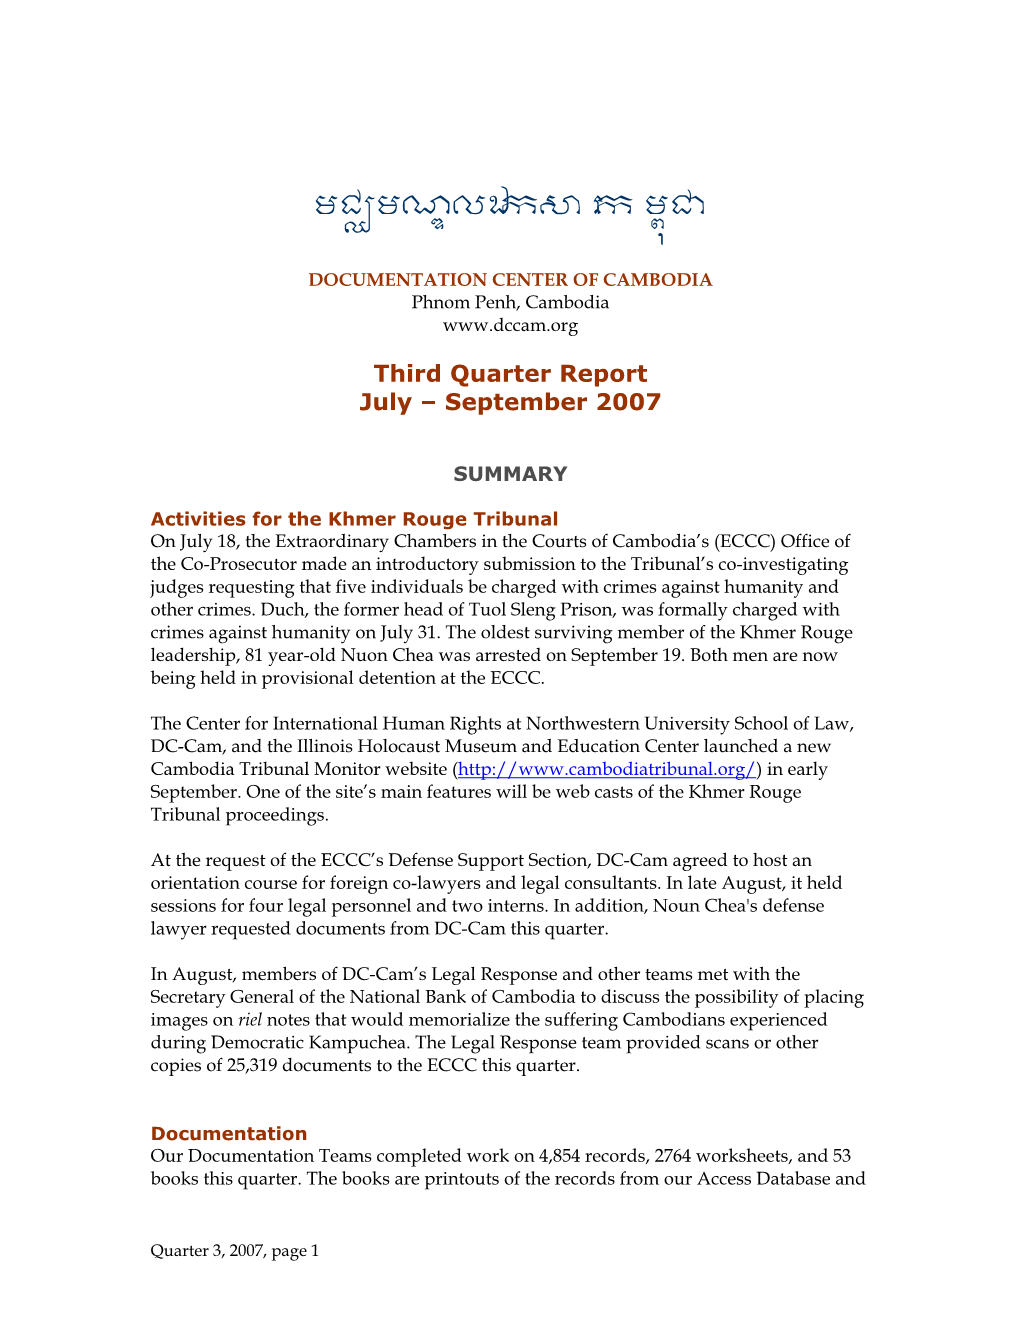 Third Quarterly Report, July – September, 2007